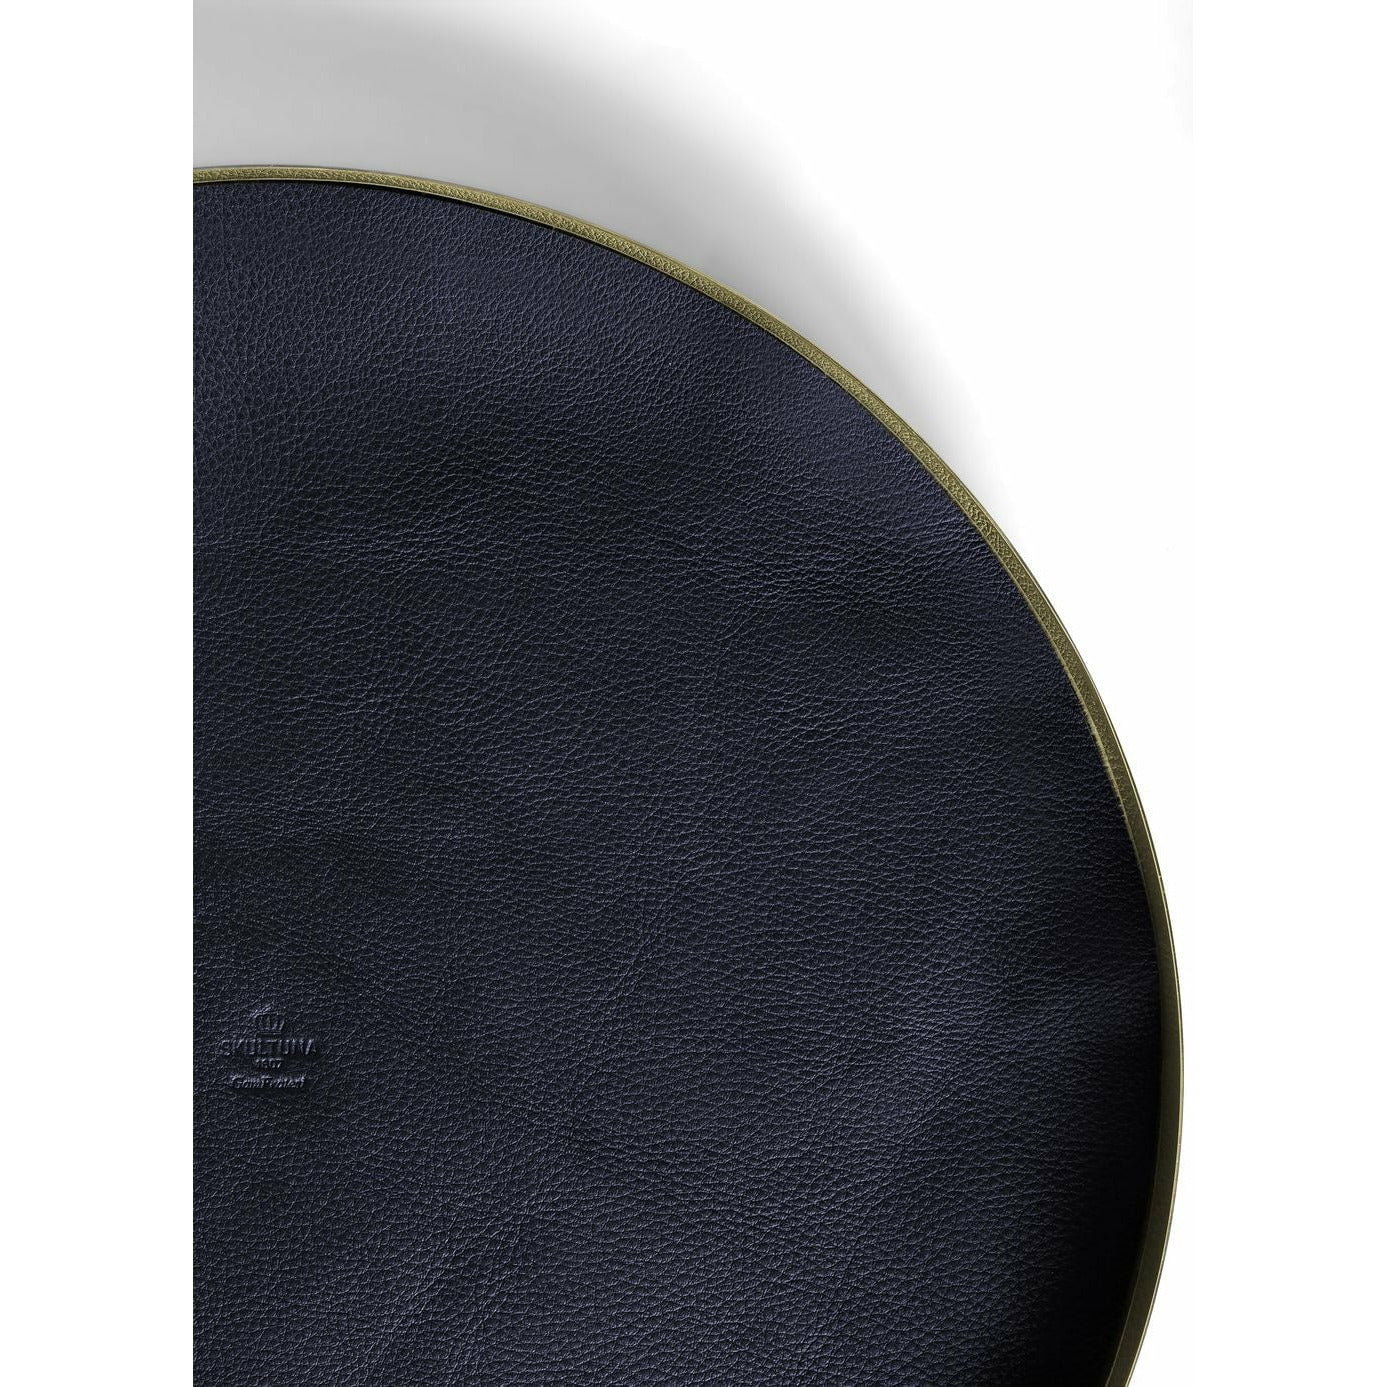 Skultuna Karui -tarjotin Ø34cm, muste sininen